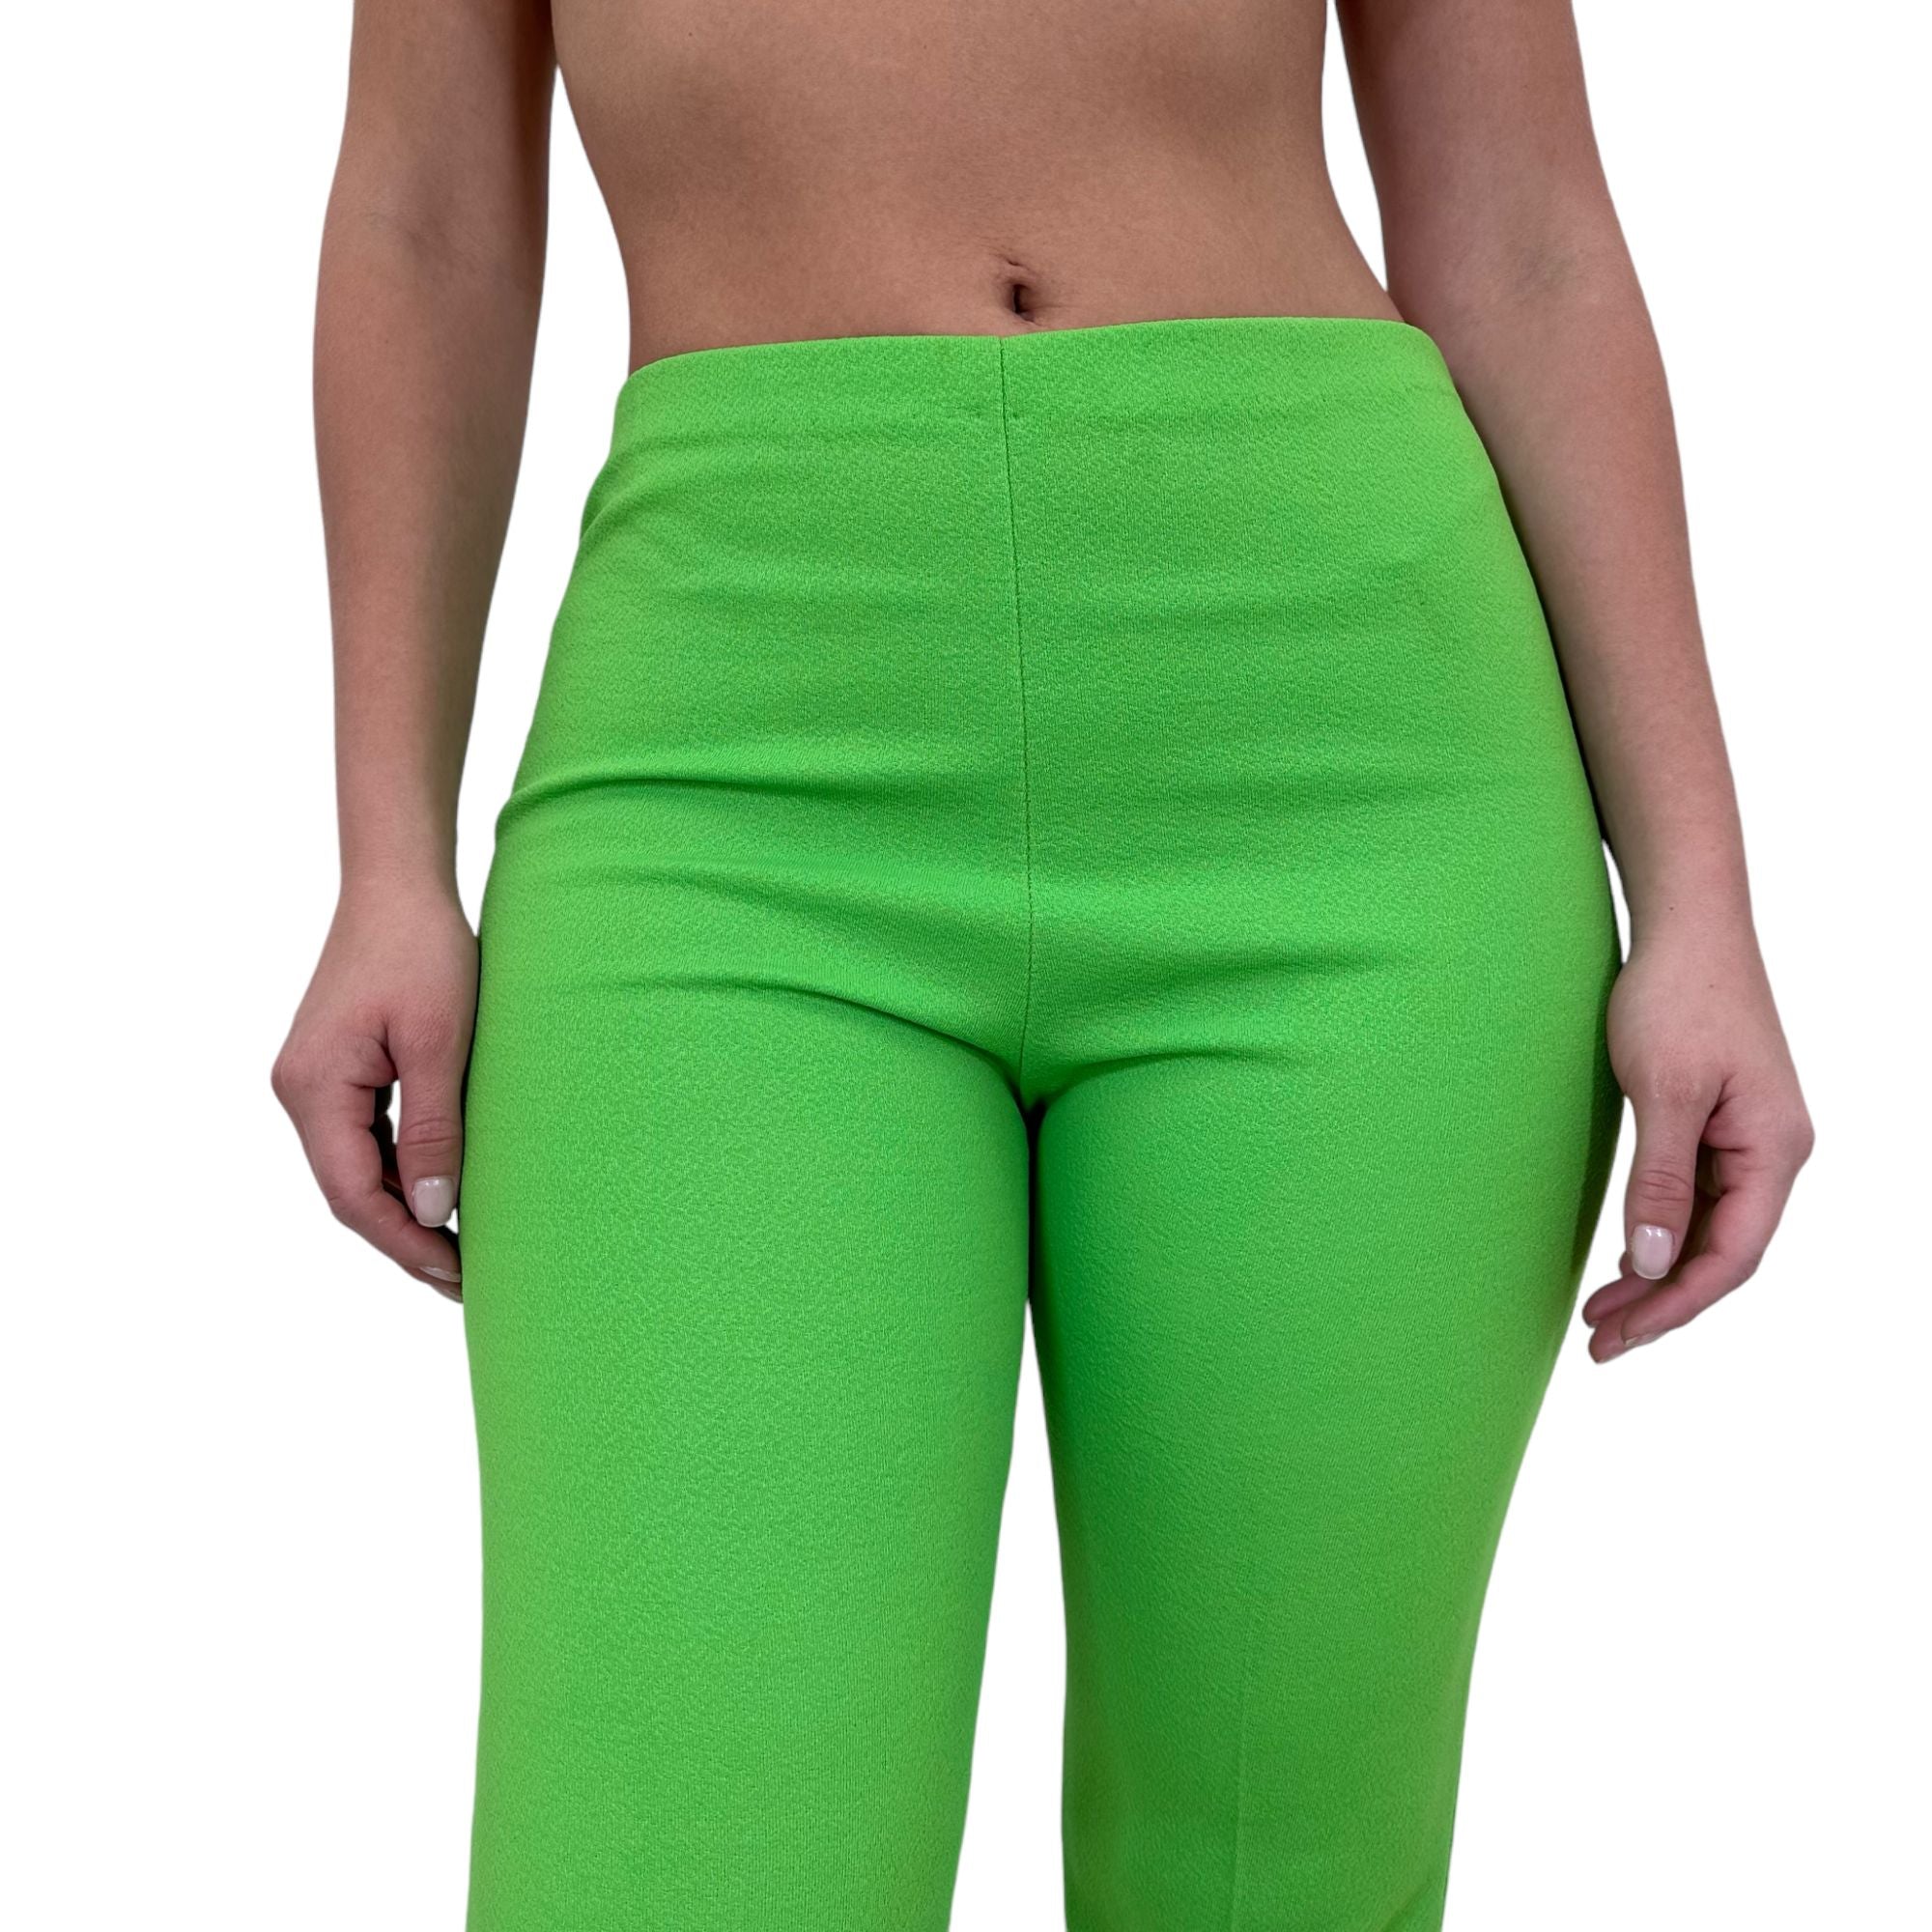 70s Vintage Neon Green Straight Pants [M, L]